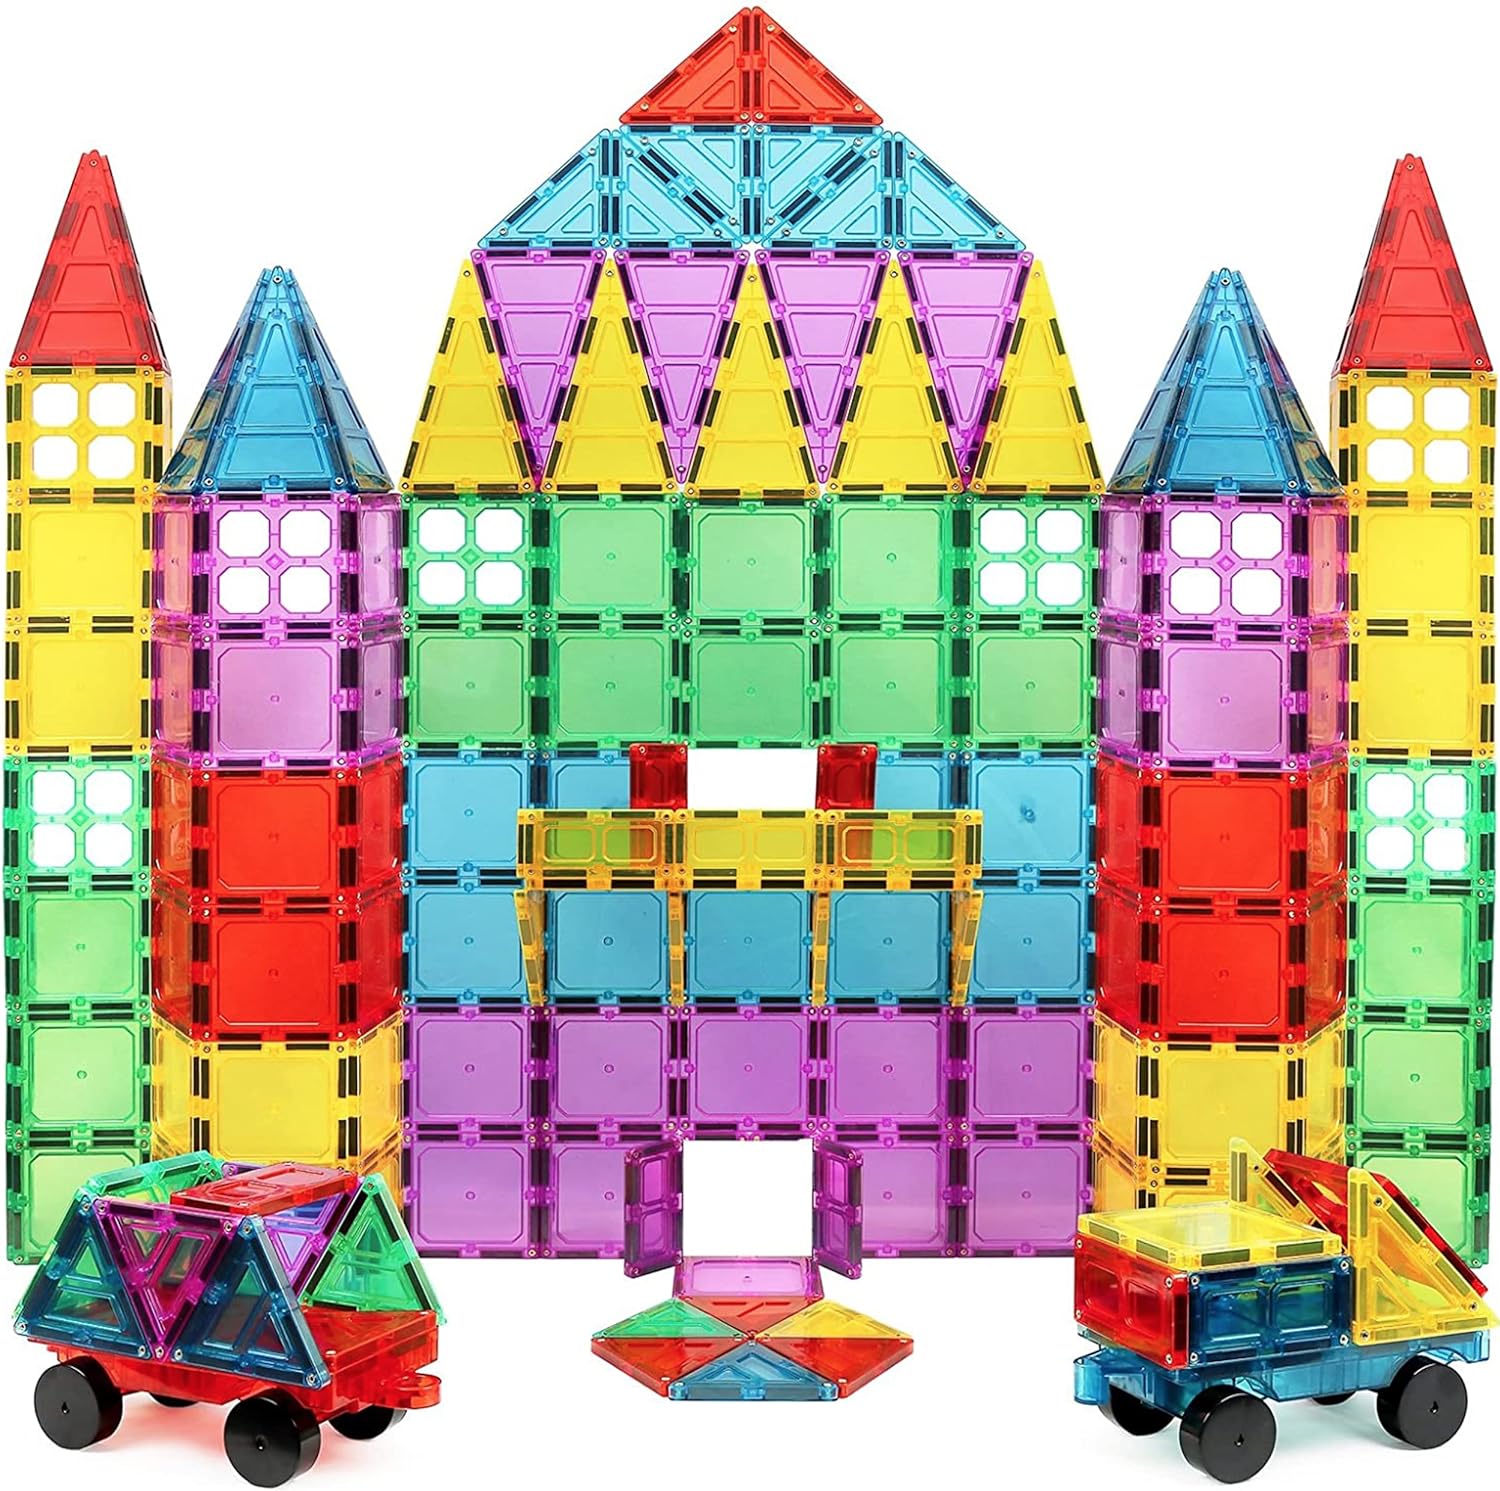 3D Magnetic Tiles Building Blocks Set for Kids